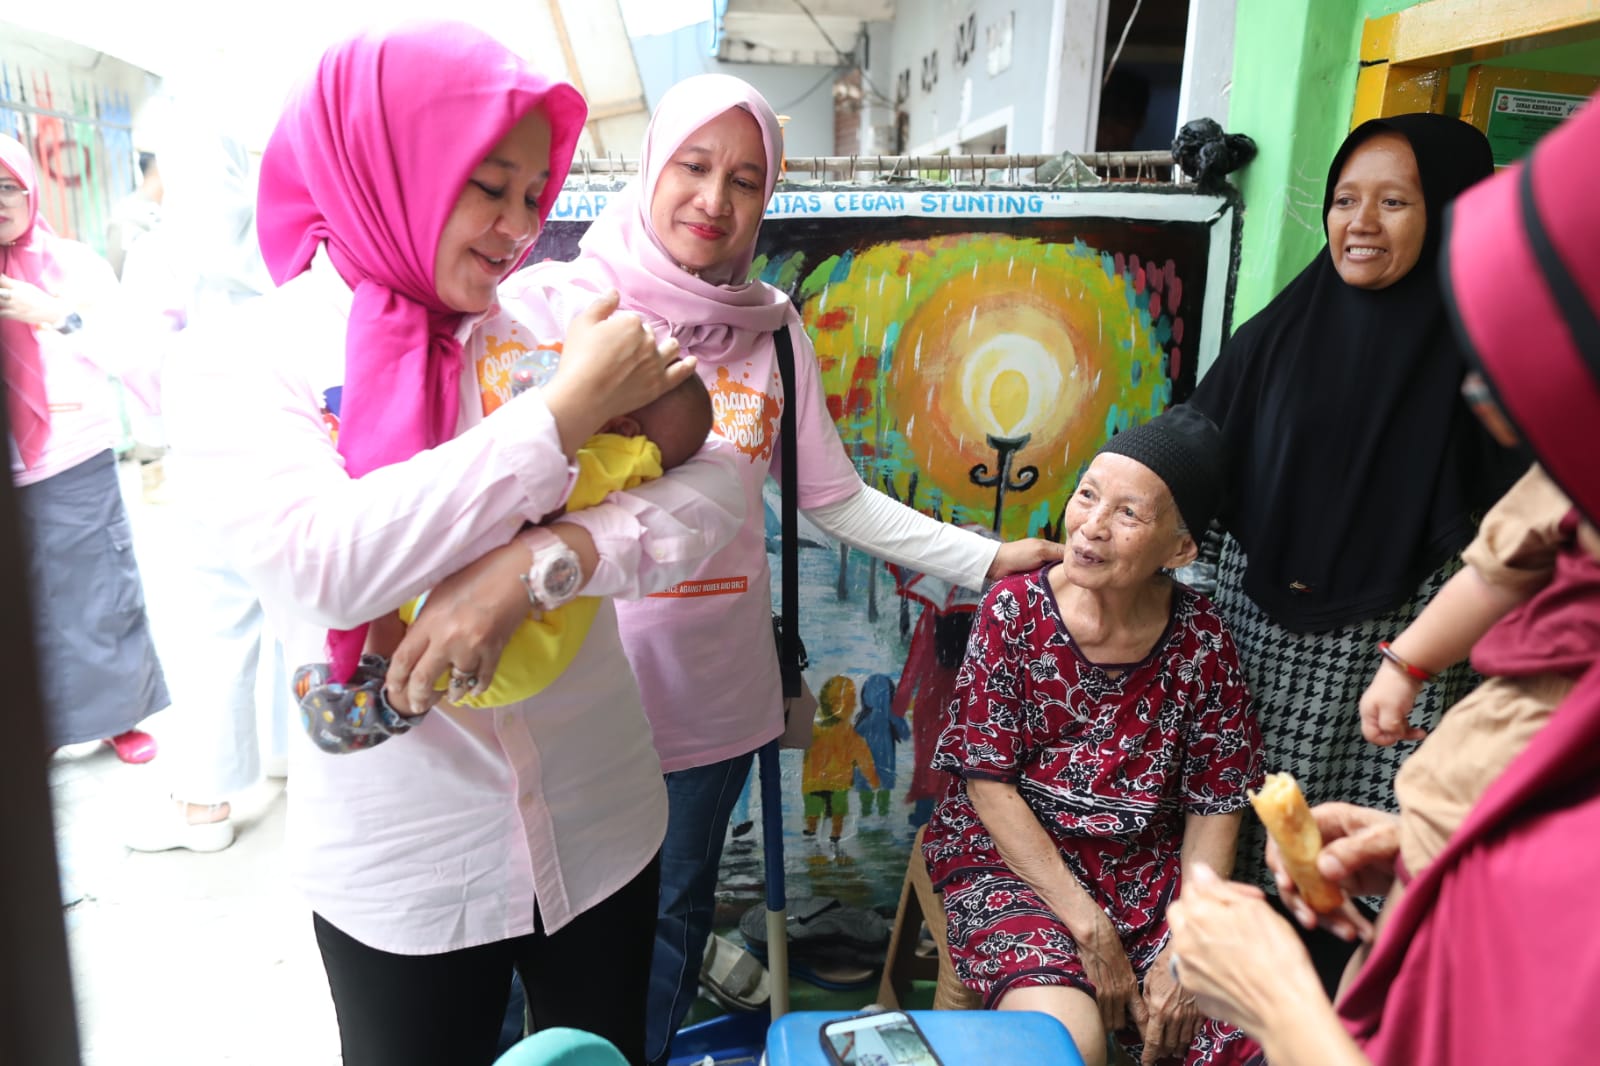 Shelter Warga Buka Layanan Konsultasi Gratis di Lorong Wisata, Fatmawati Rusdi: Upaya Mendekatkan Pelayanan